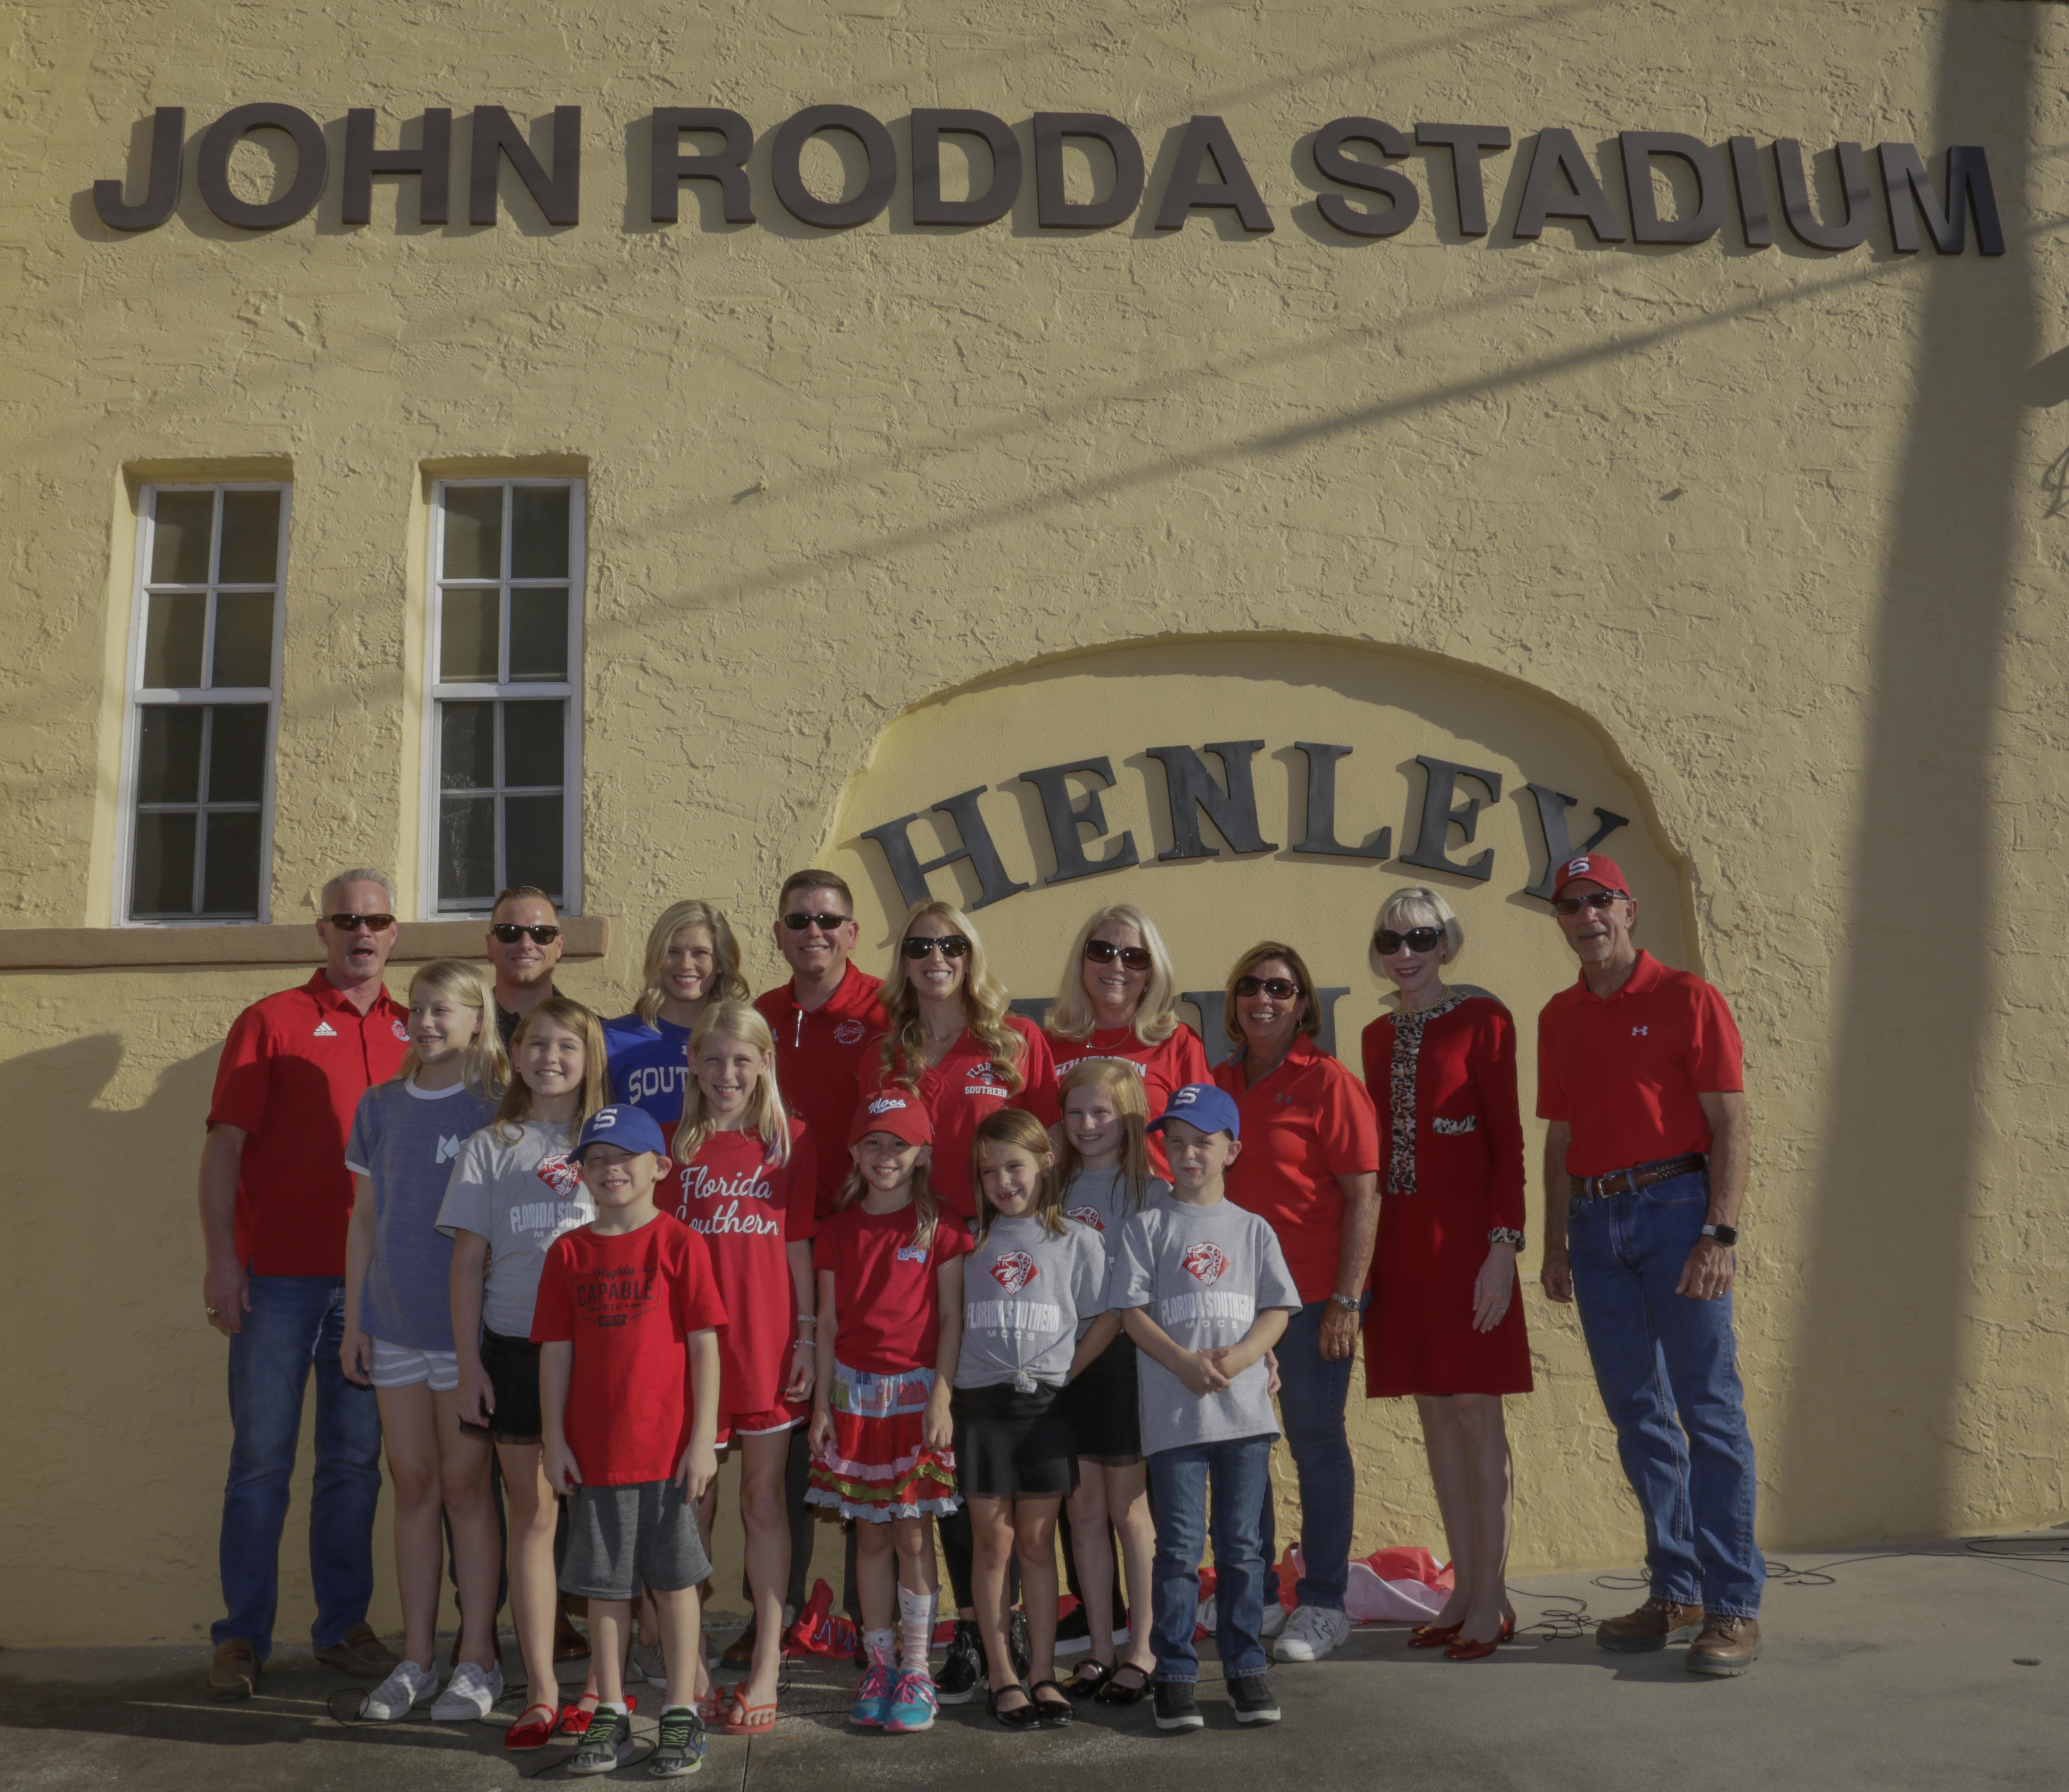 Henley Field John Rodda Stadium